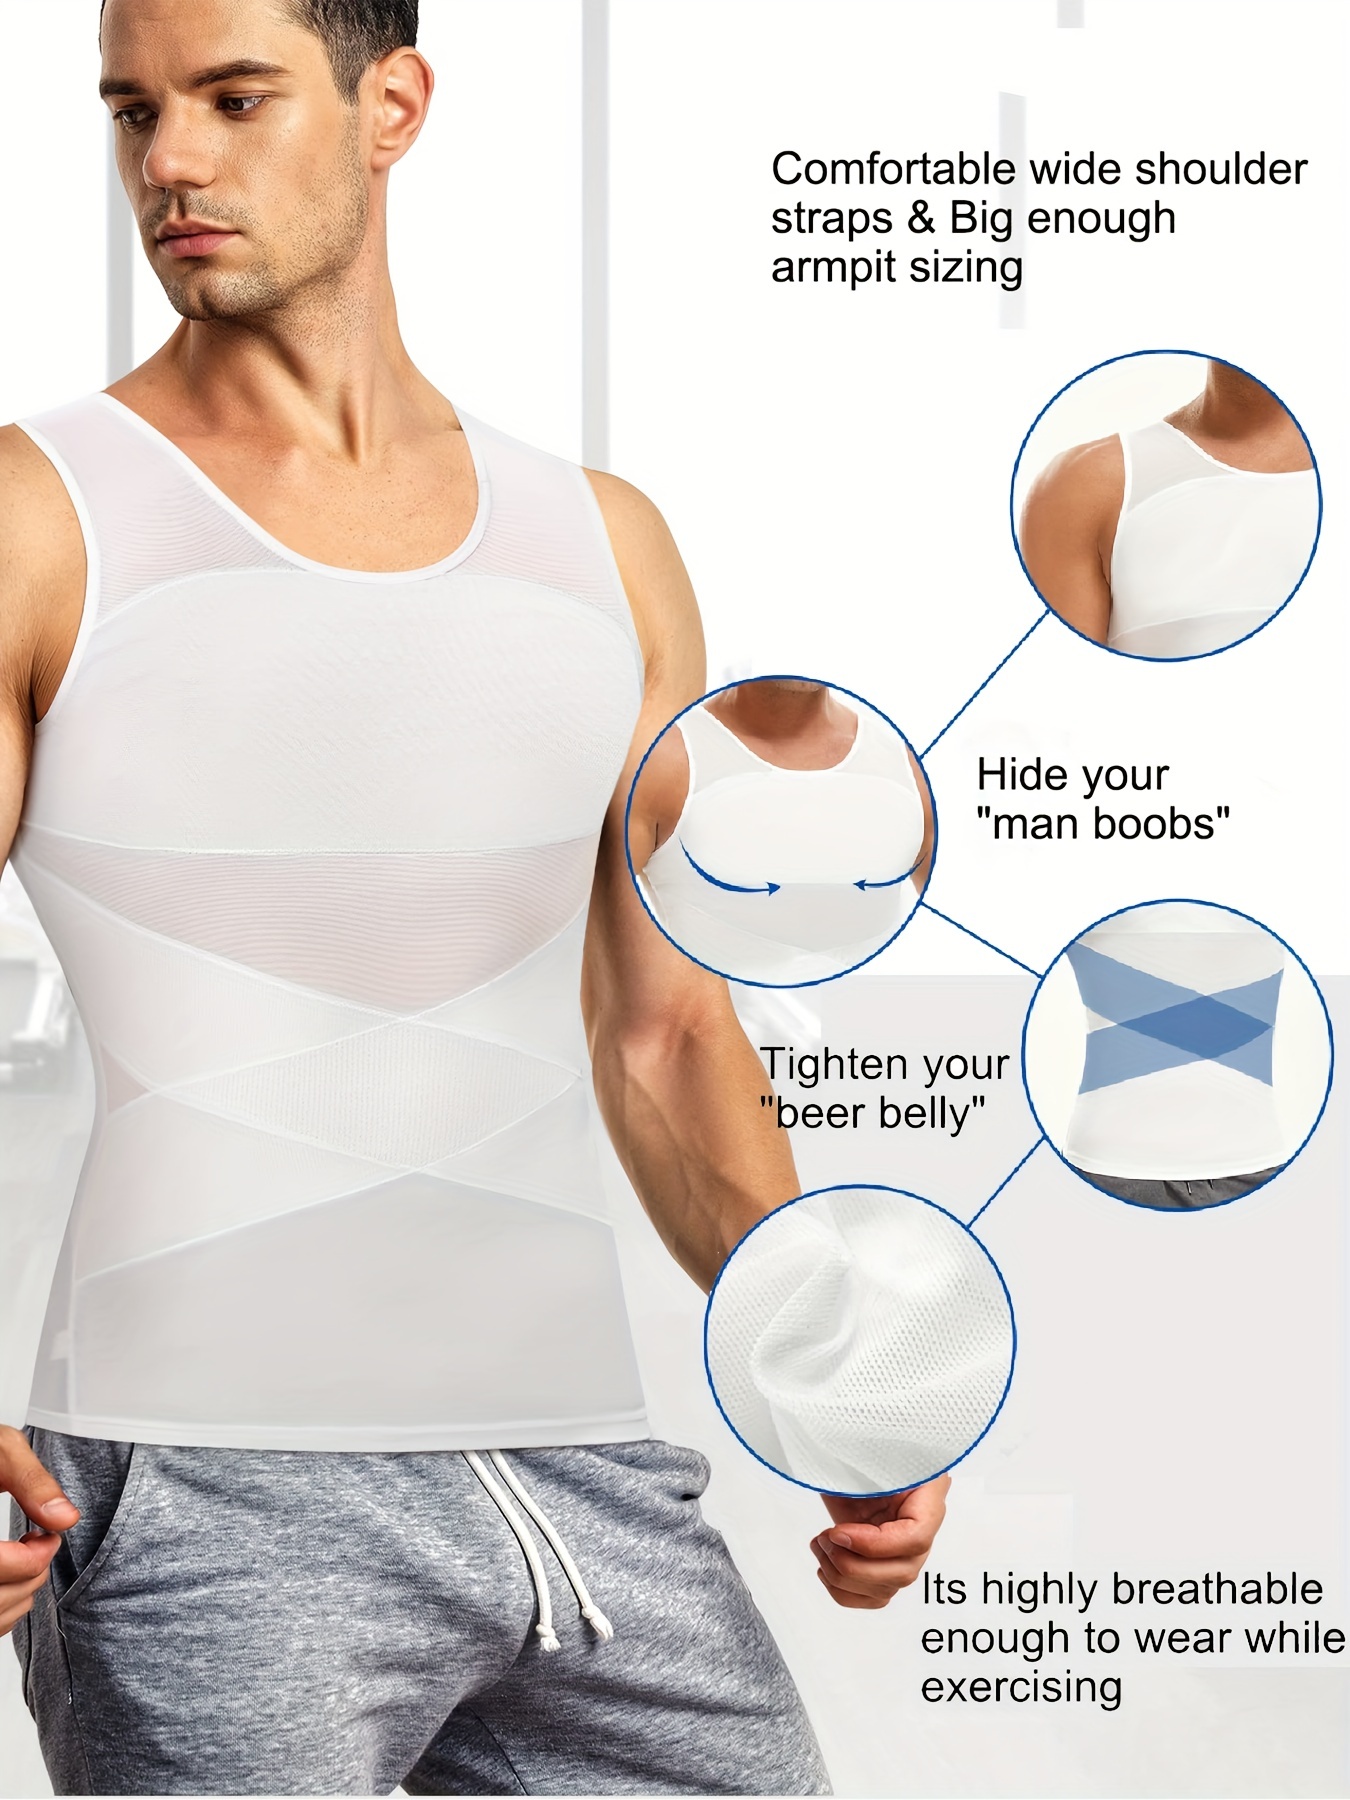 Men's Body Shaper Vest Shirts Compression Tummy Belly Control